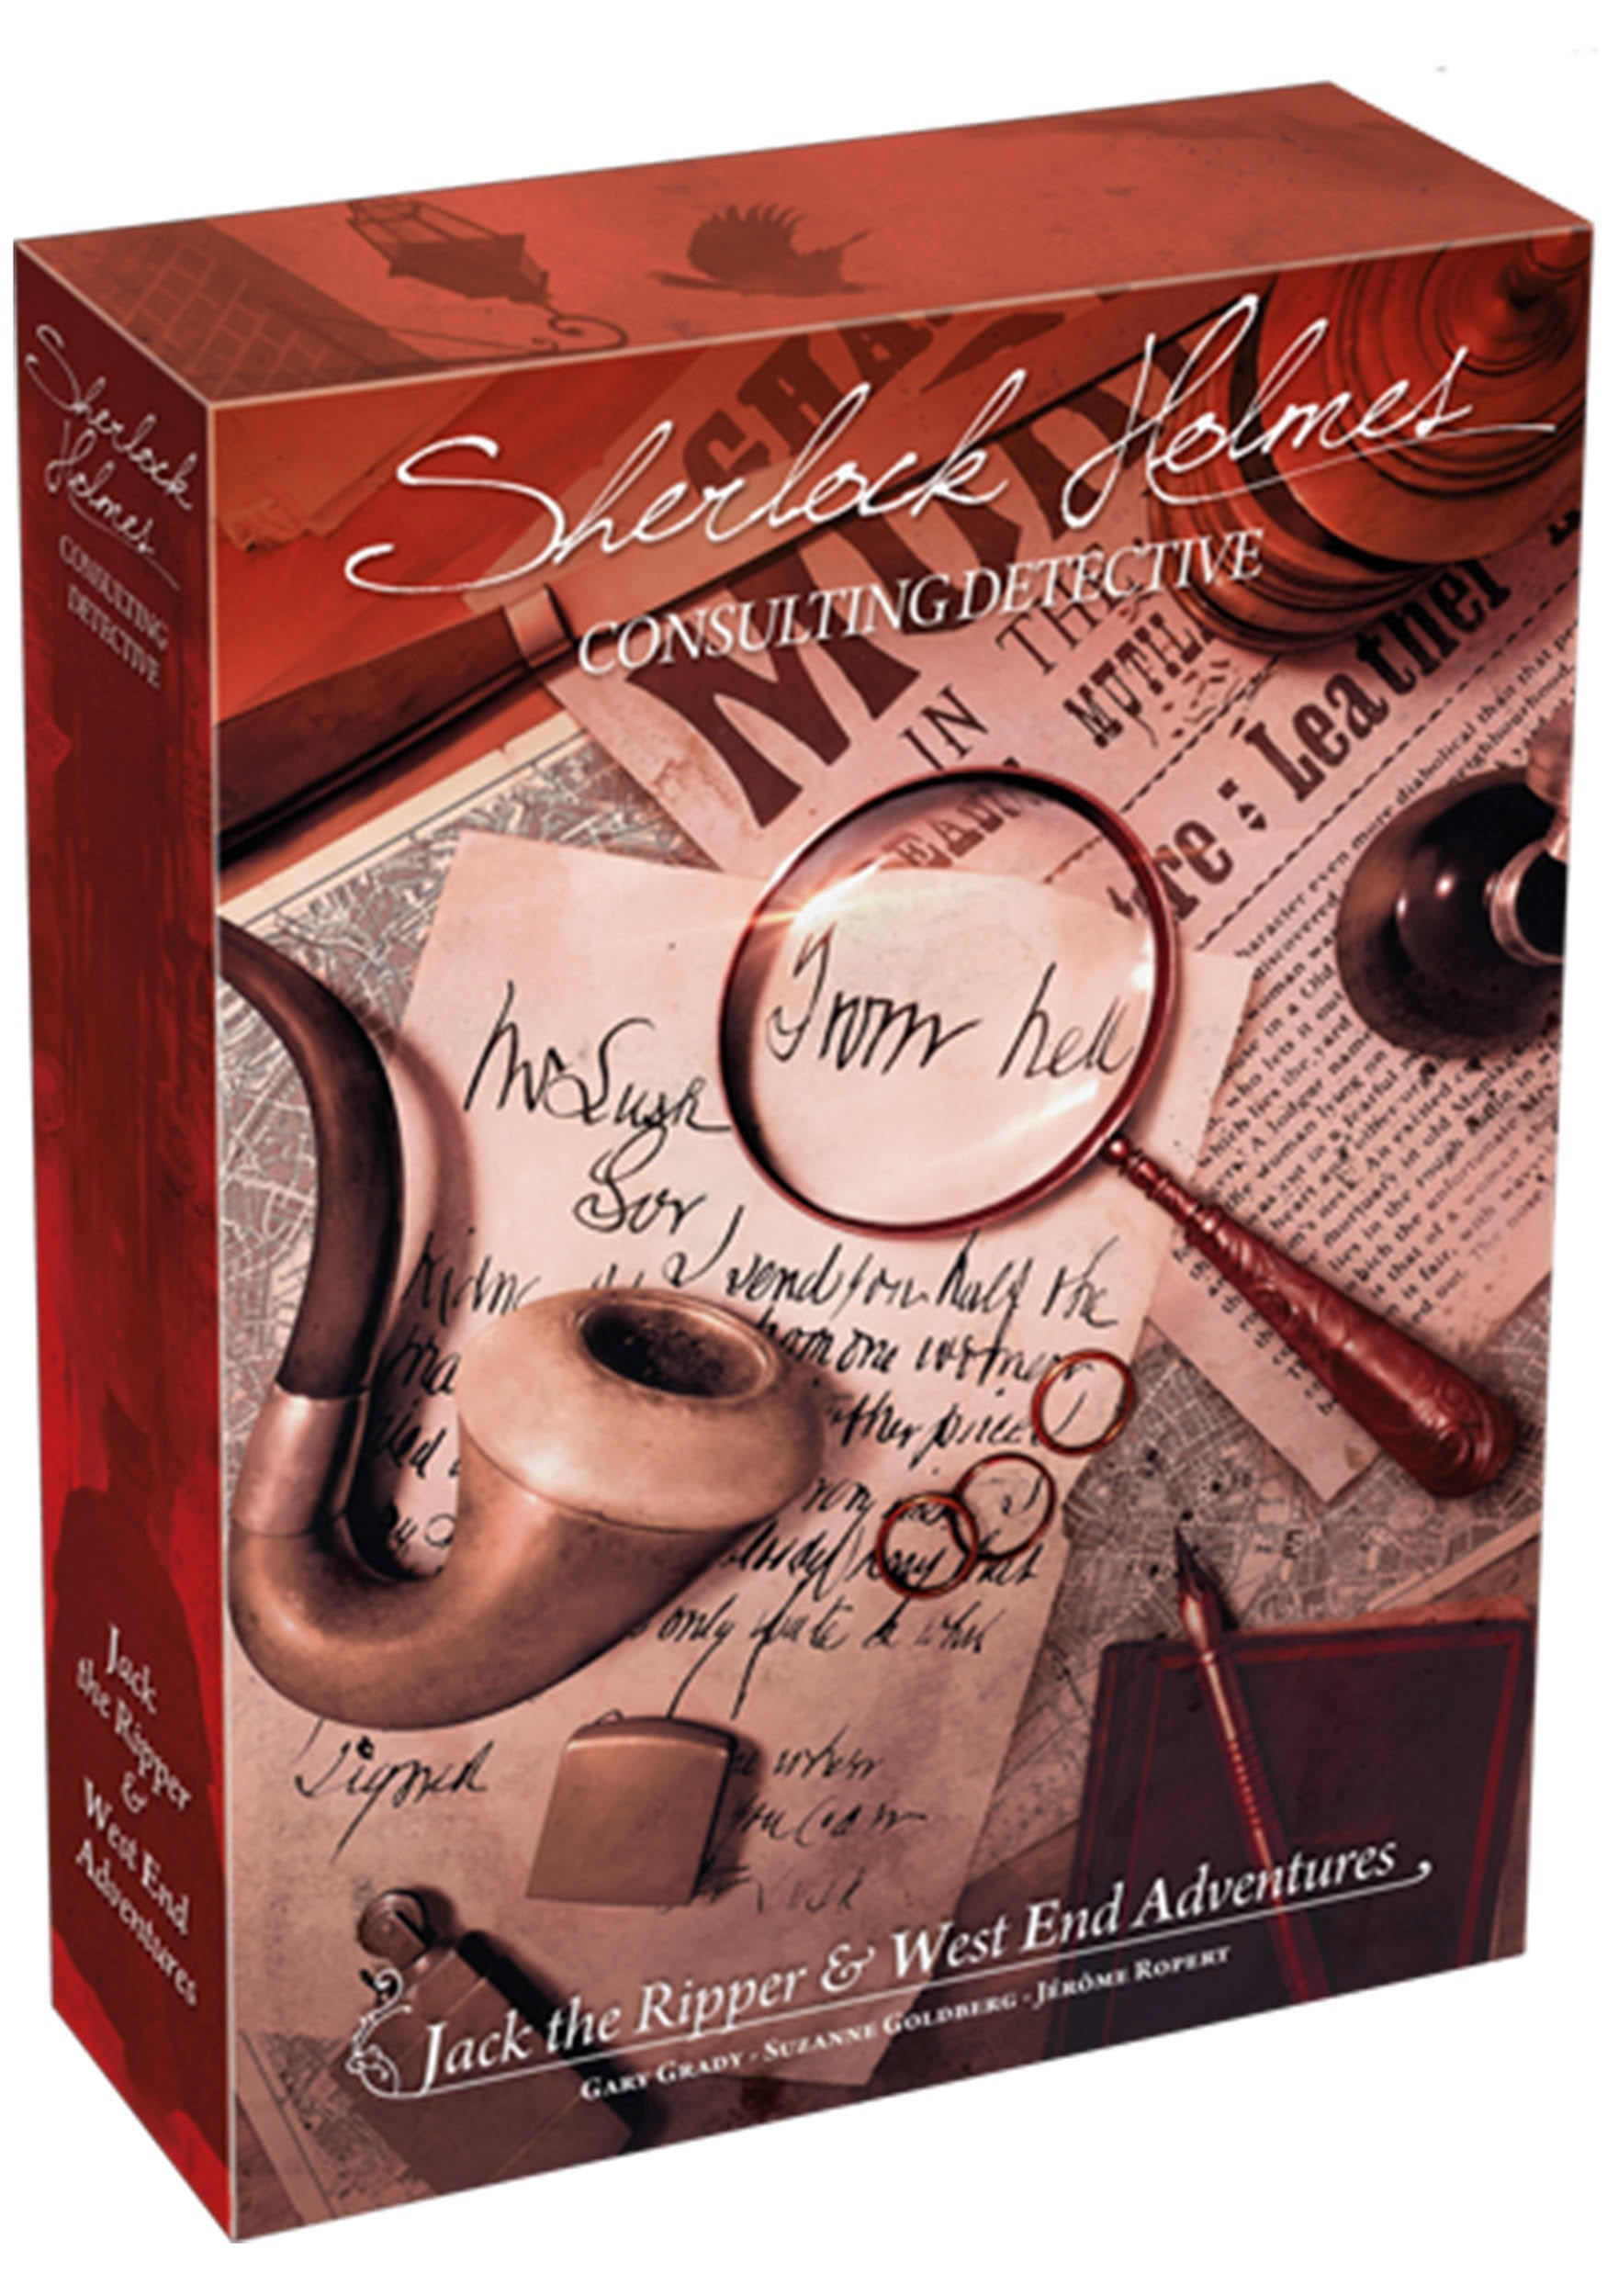 Sherlock Holmes Consulting Detective - Raymond Lovato